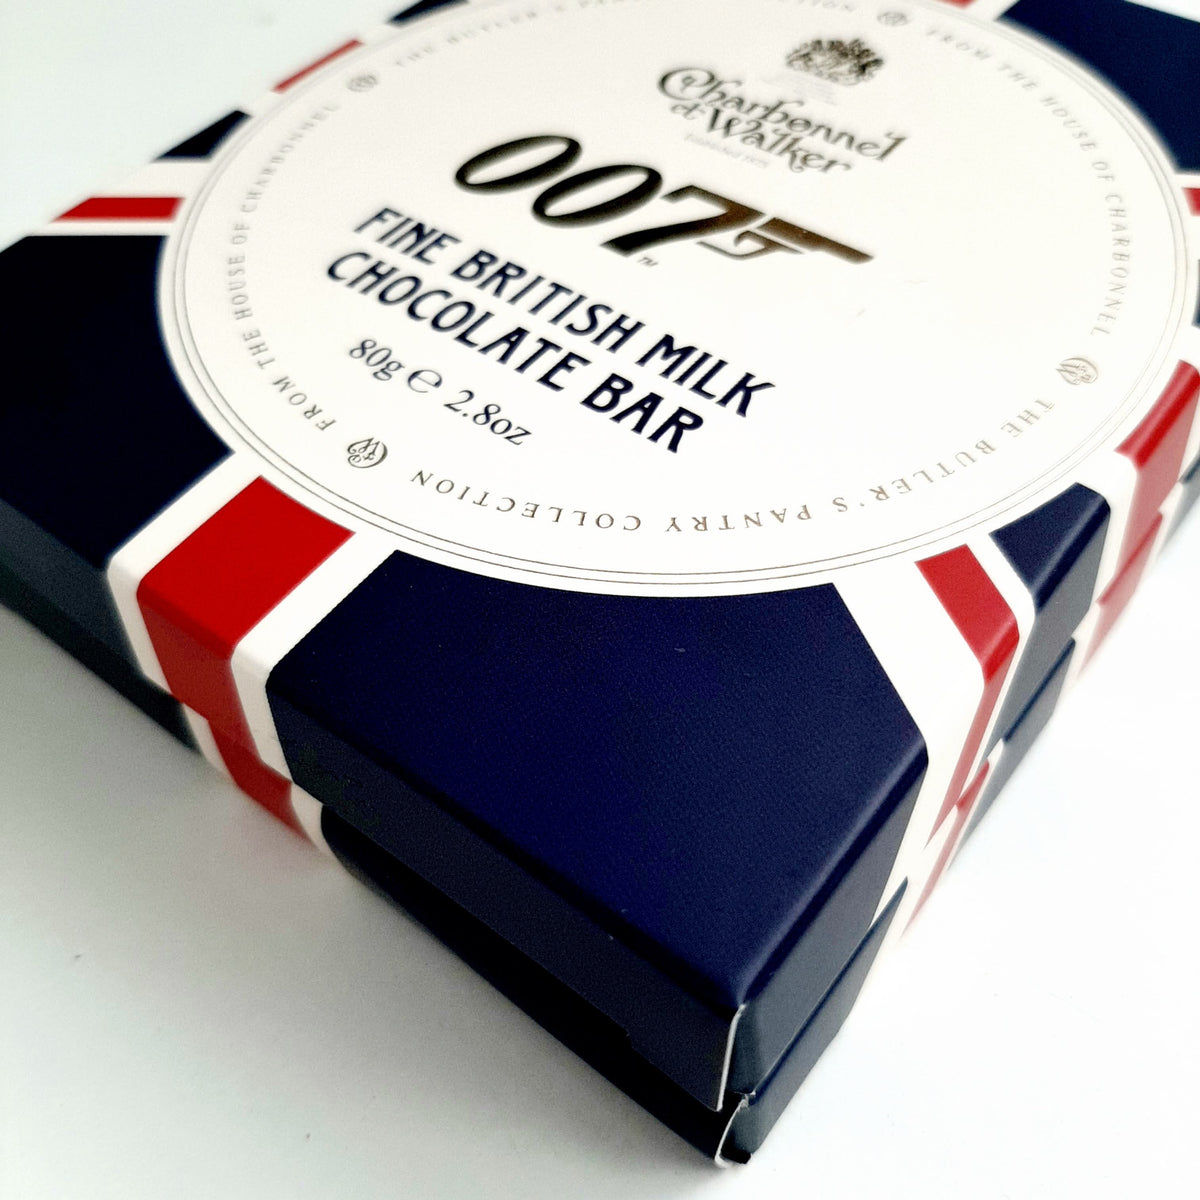 007 British Milk Chocolate Bar (80g) - By Charbonnel et Walker CHOCOLATE Charbonnel 